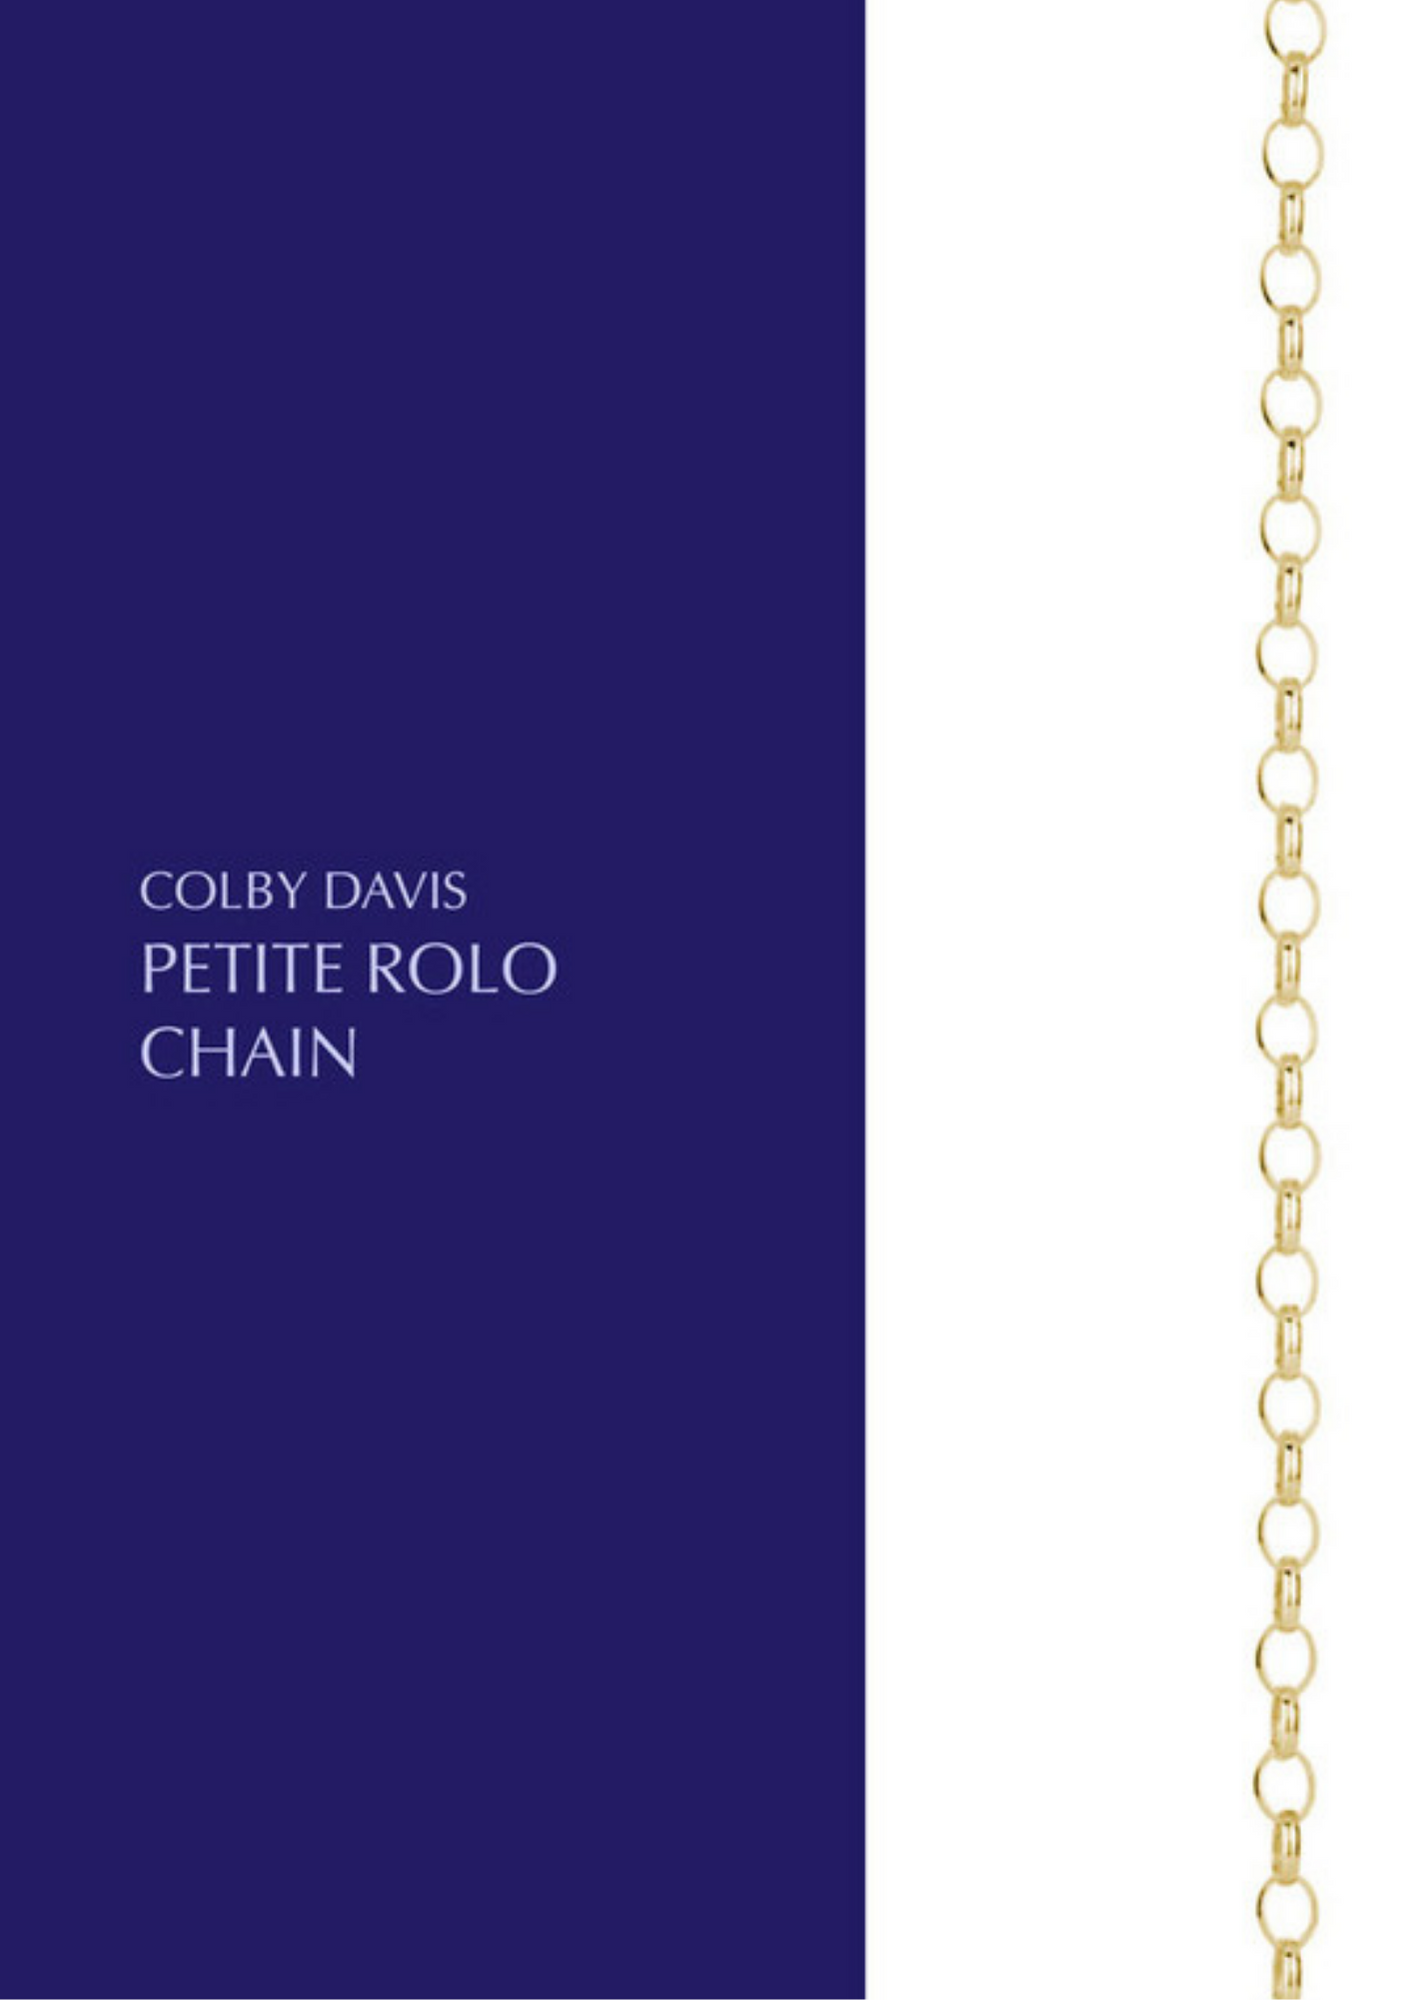 Colby Davis Chain: Gold Vermeil Petite Rolo